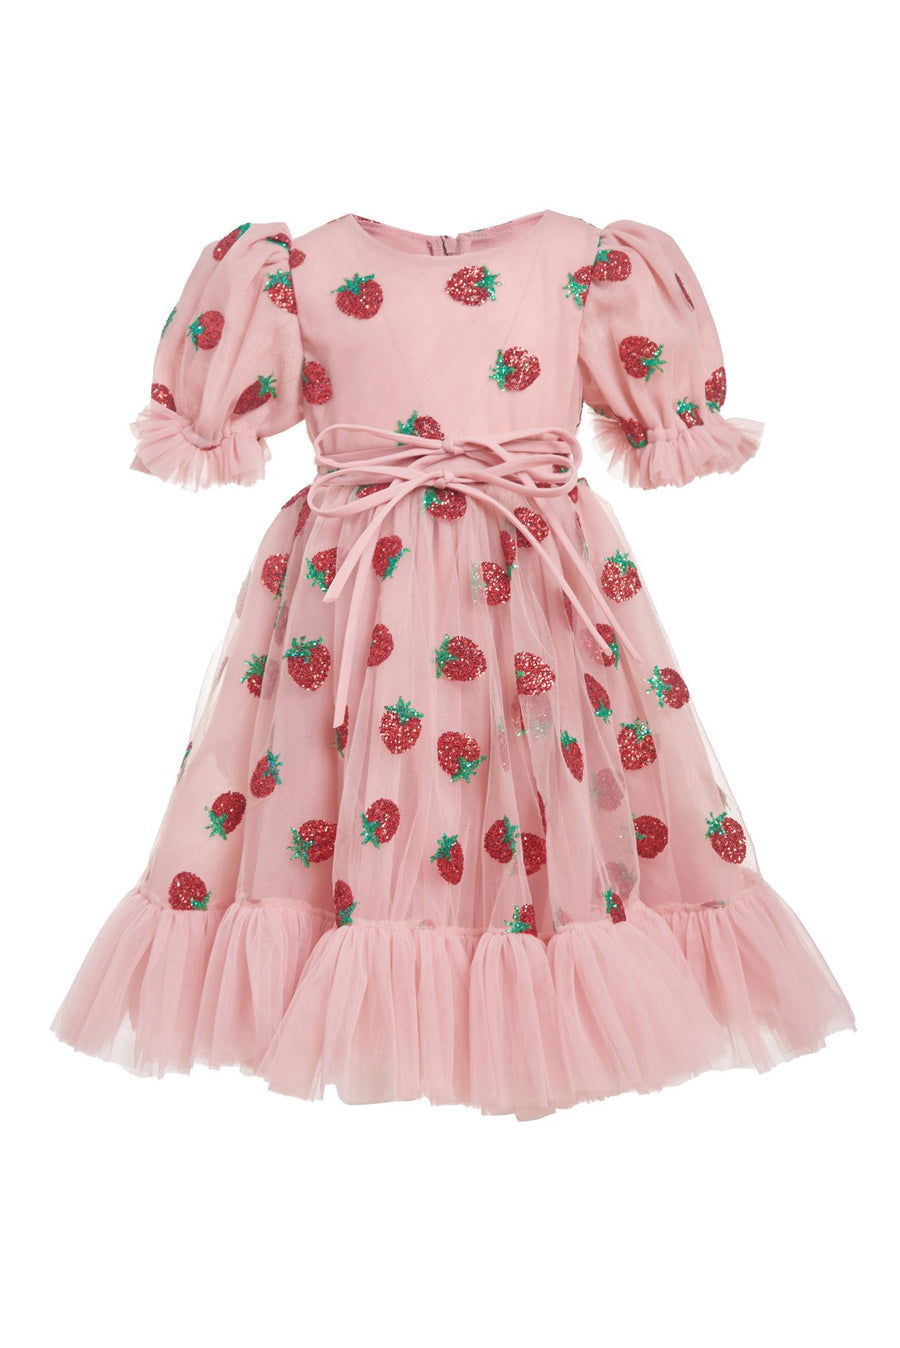 Strawberry Midi Dress for Kids